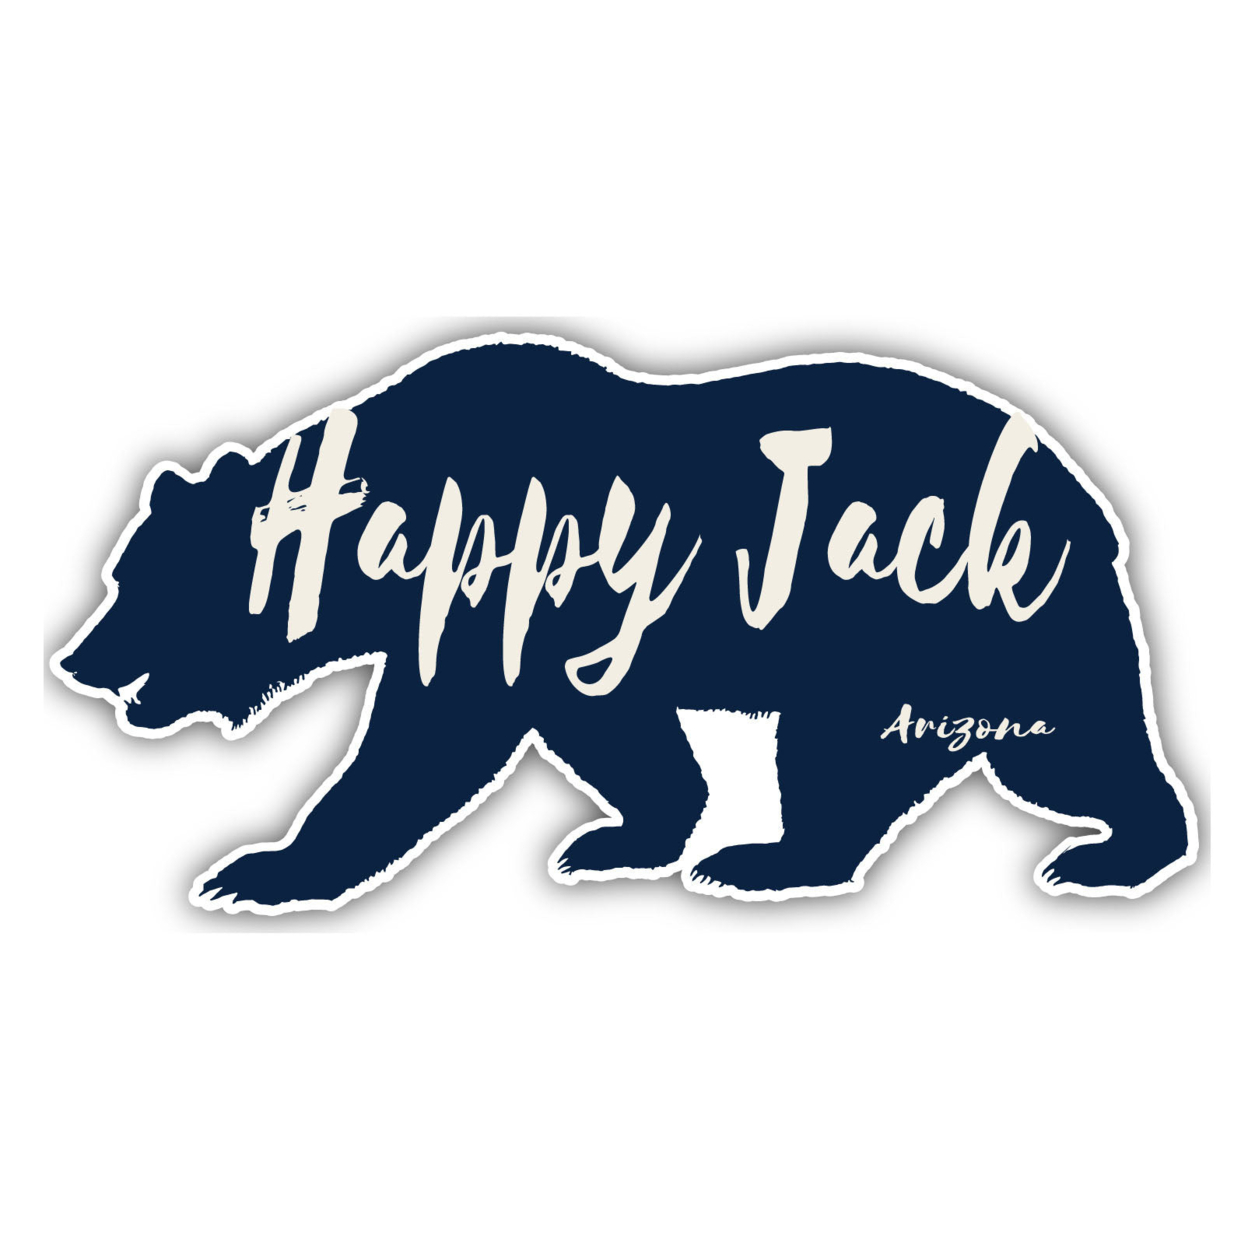 Happy Jack Arizona Souvenir Decorative Stickers (Choose Theme And Size) - 4-Pack, 2-Inch, Tent